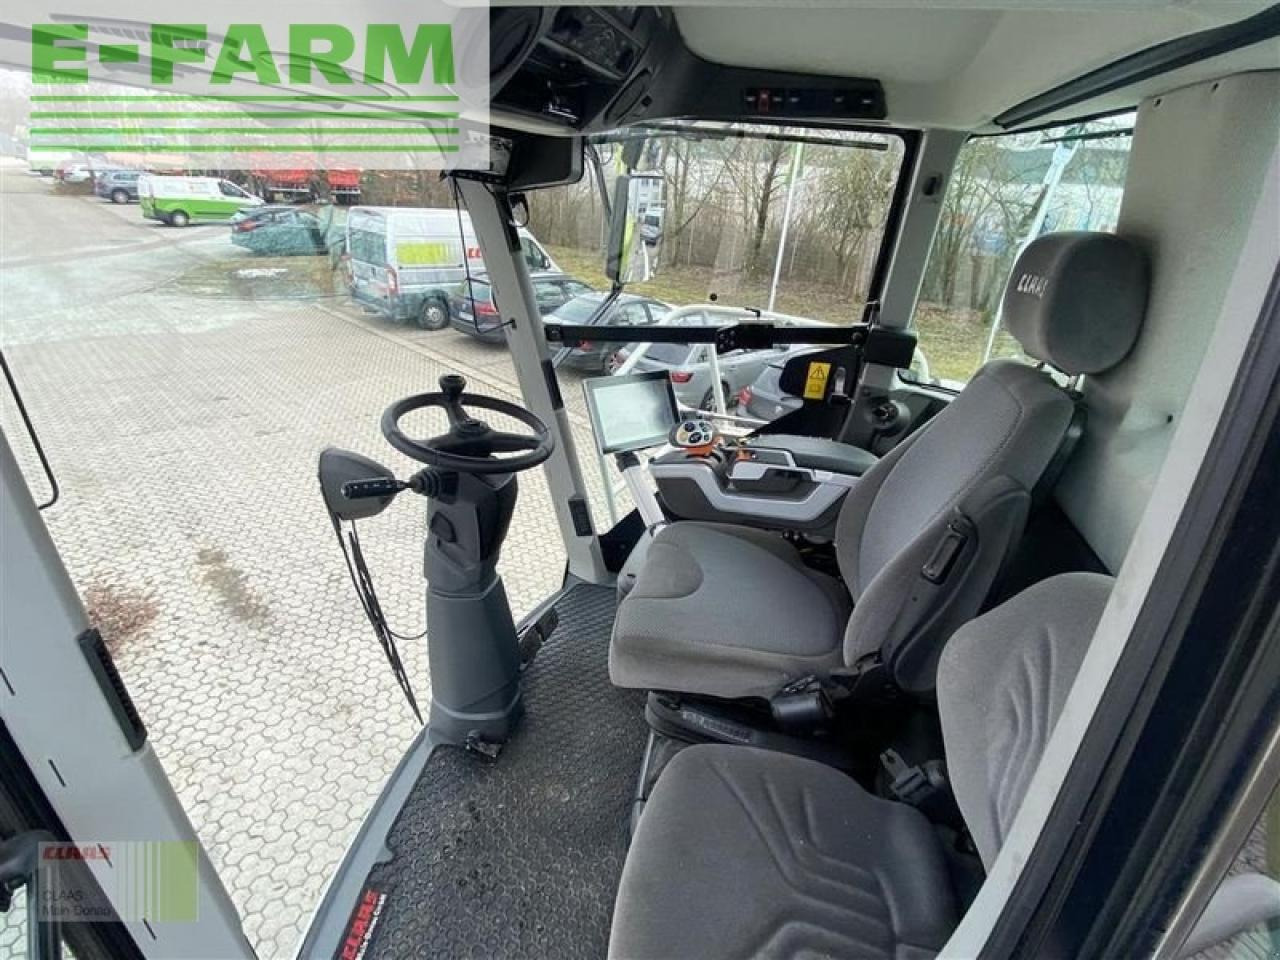 Farm tractor CLAAS jaguar 970 - stage v